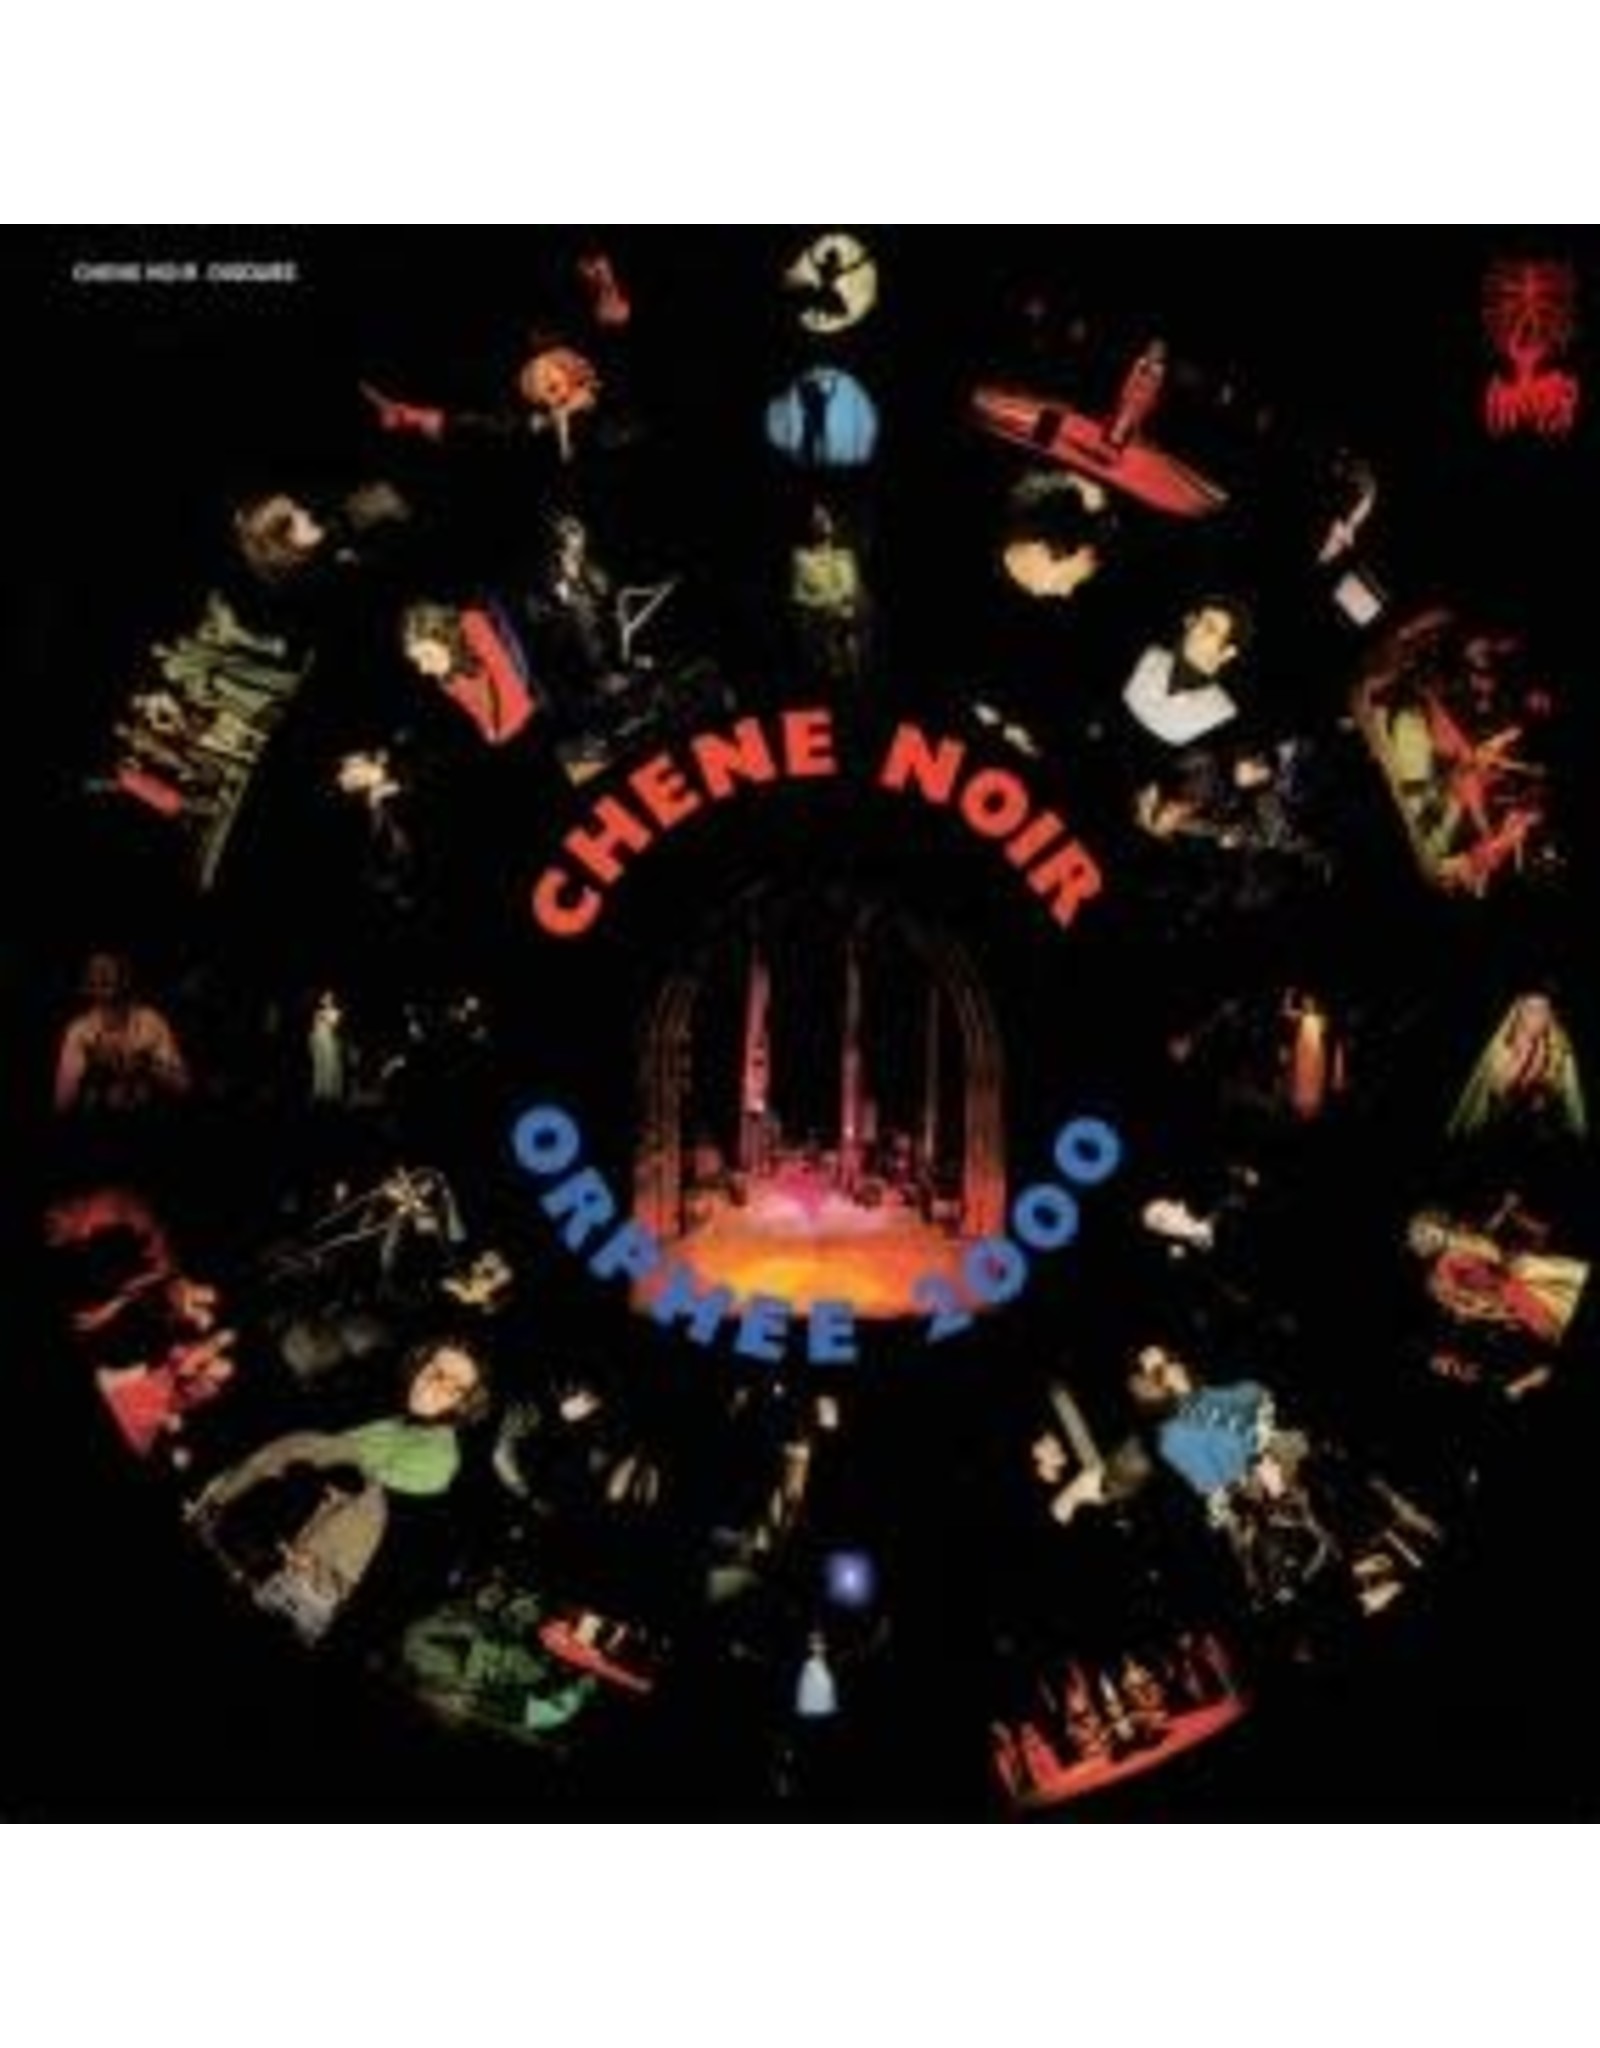 Heavenly Sweetness Chene Noir: Orphee 2000 LP